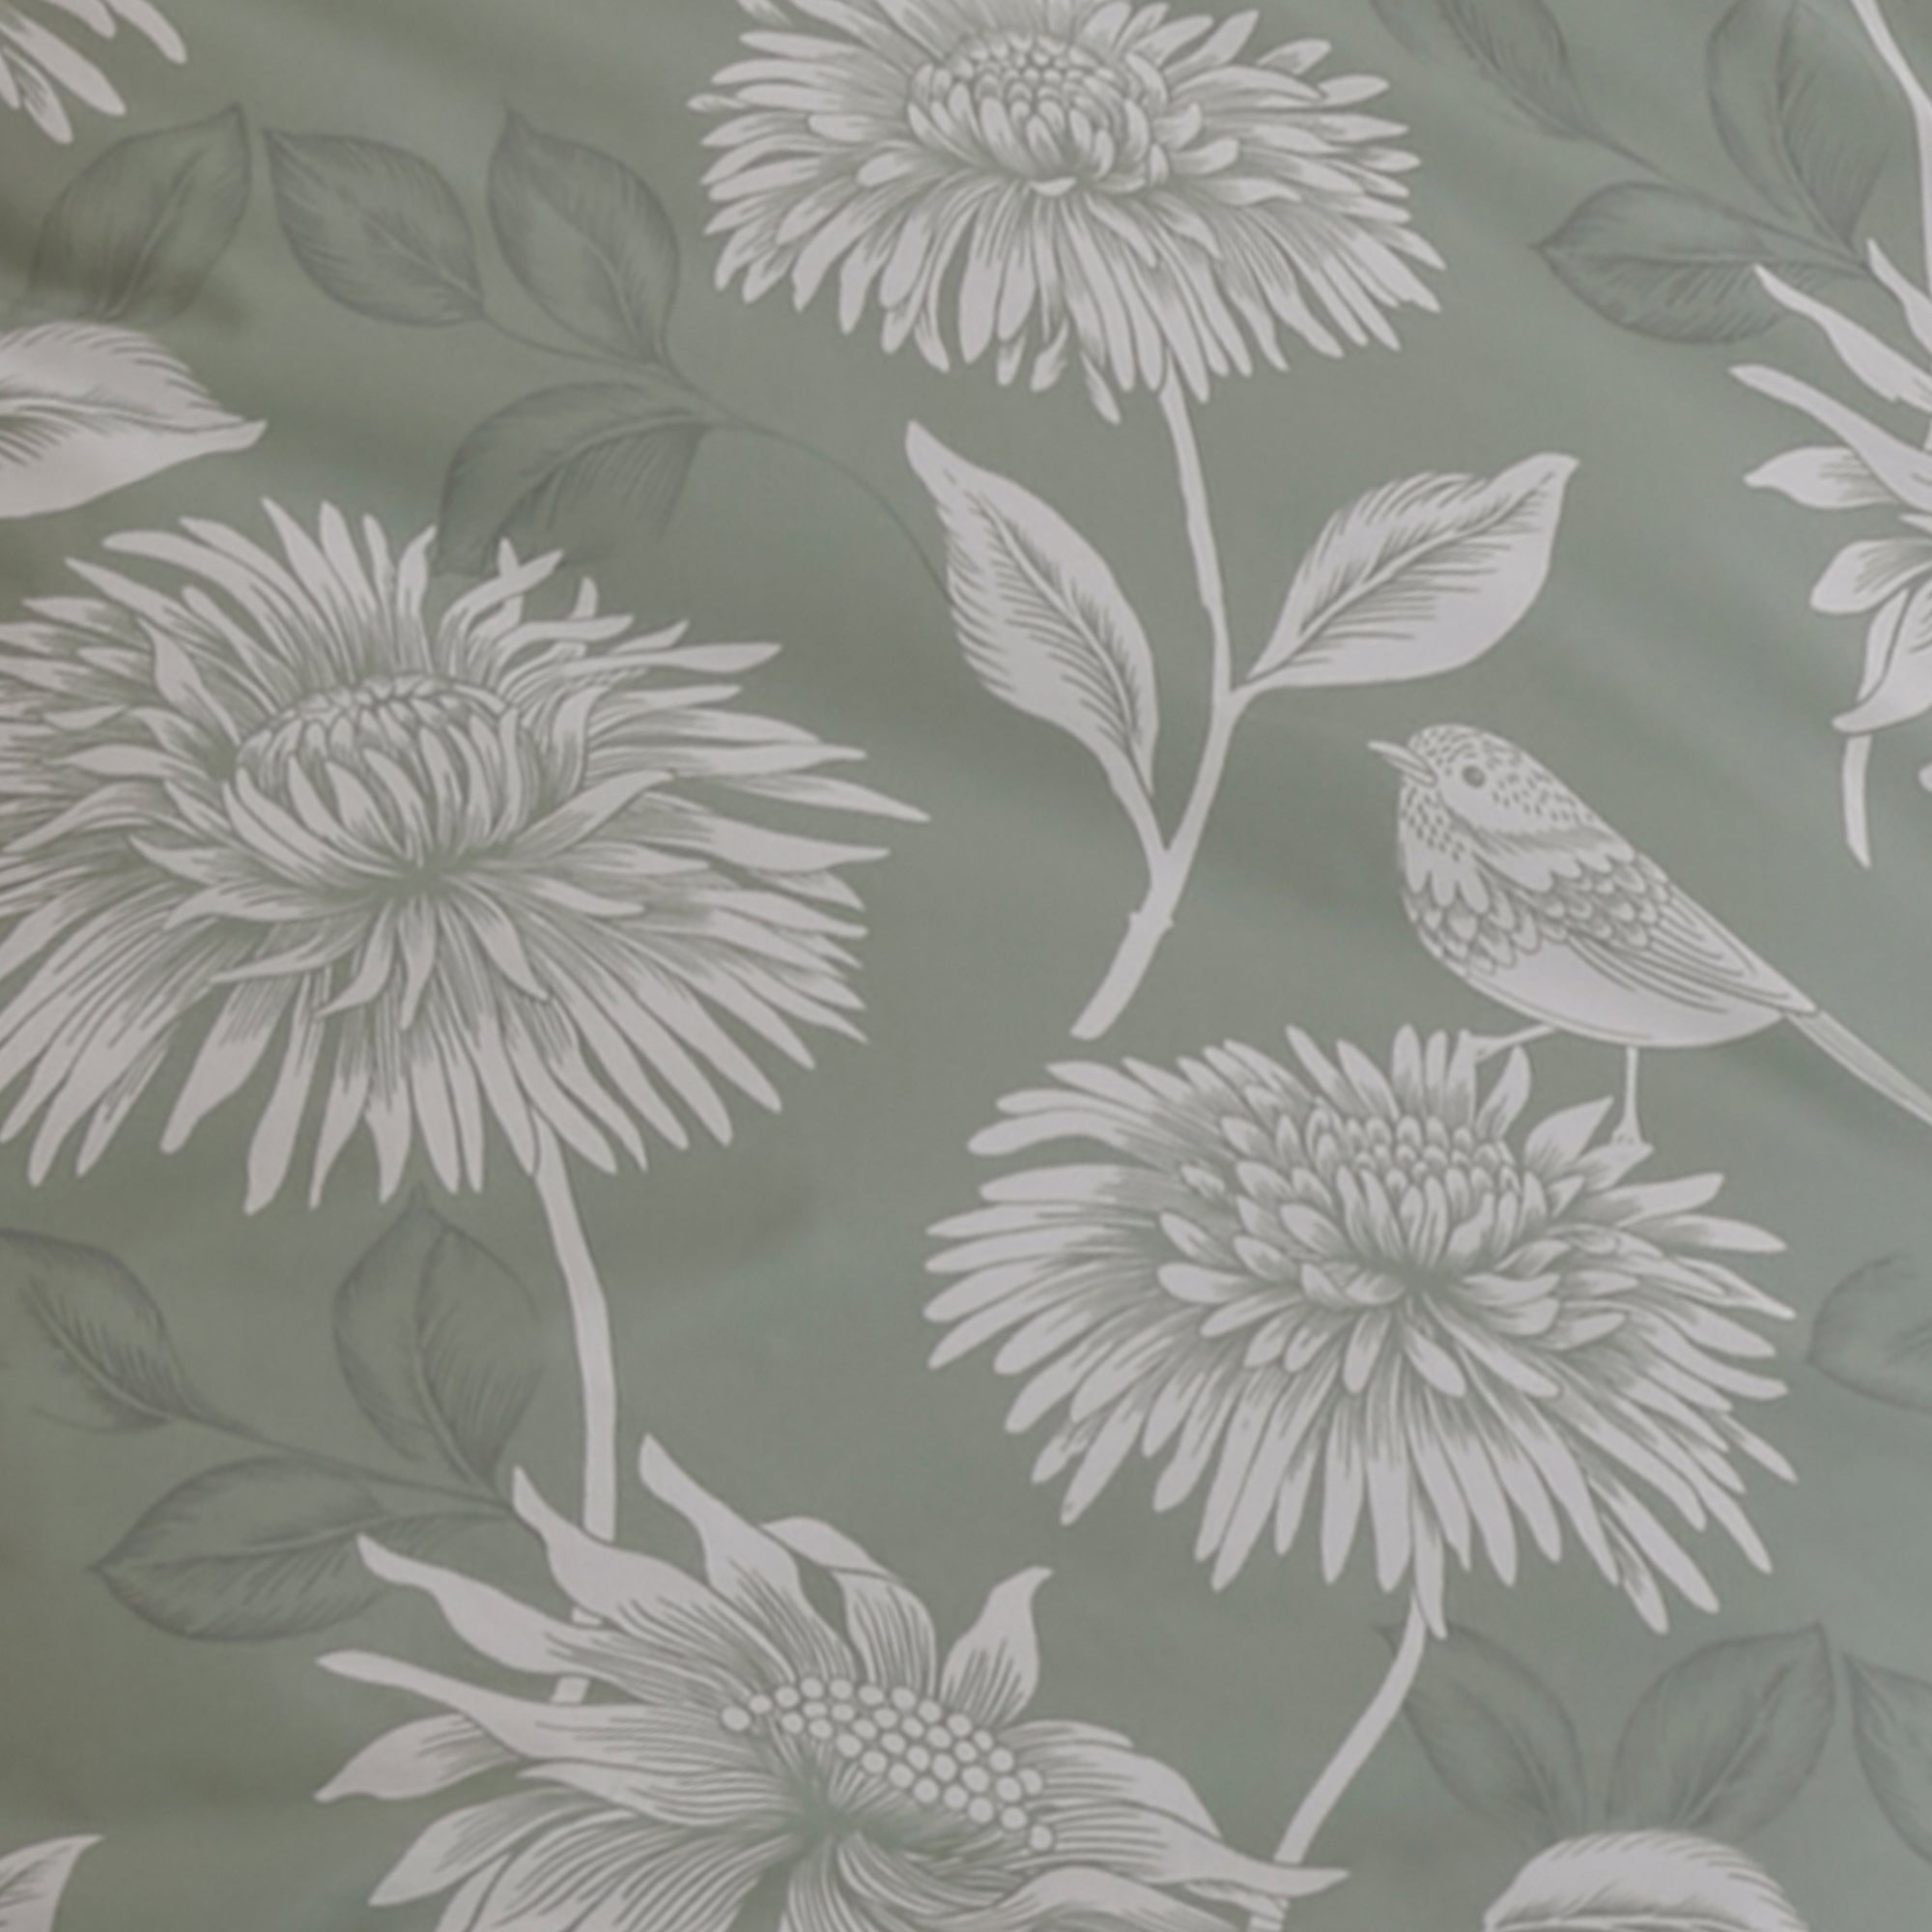 Duvet Cover Set Chrysanthemum by D&D Design in Green